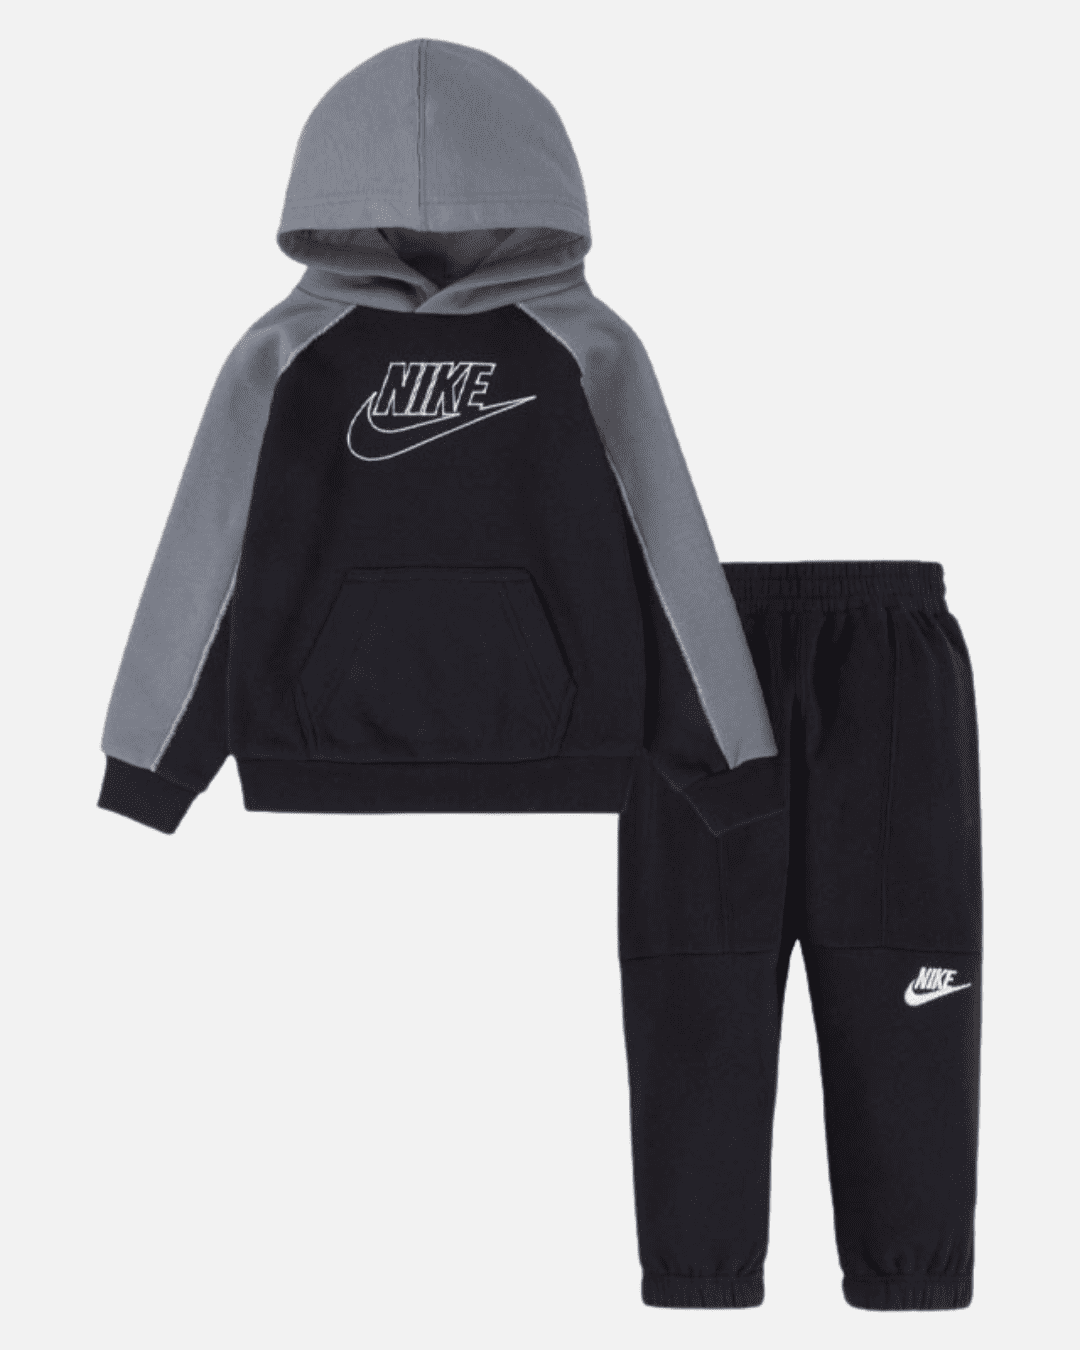 Nike Amplify Po Baby-Set – Schwarz/Grau